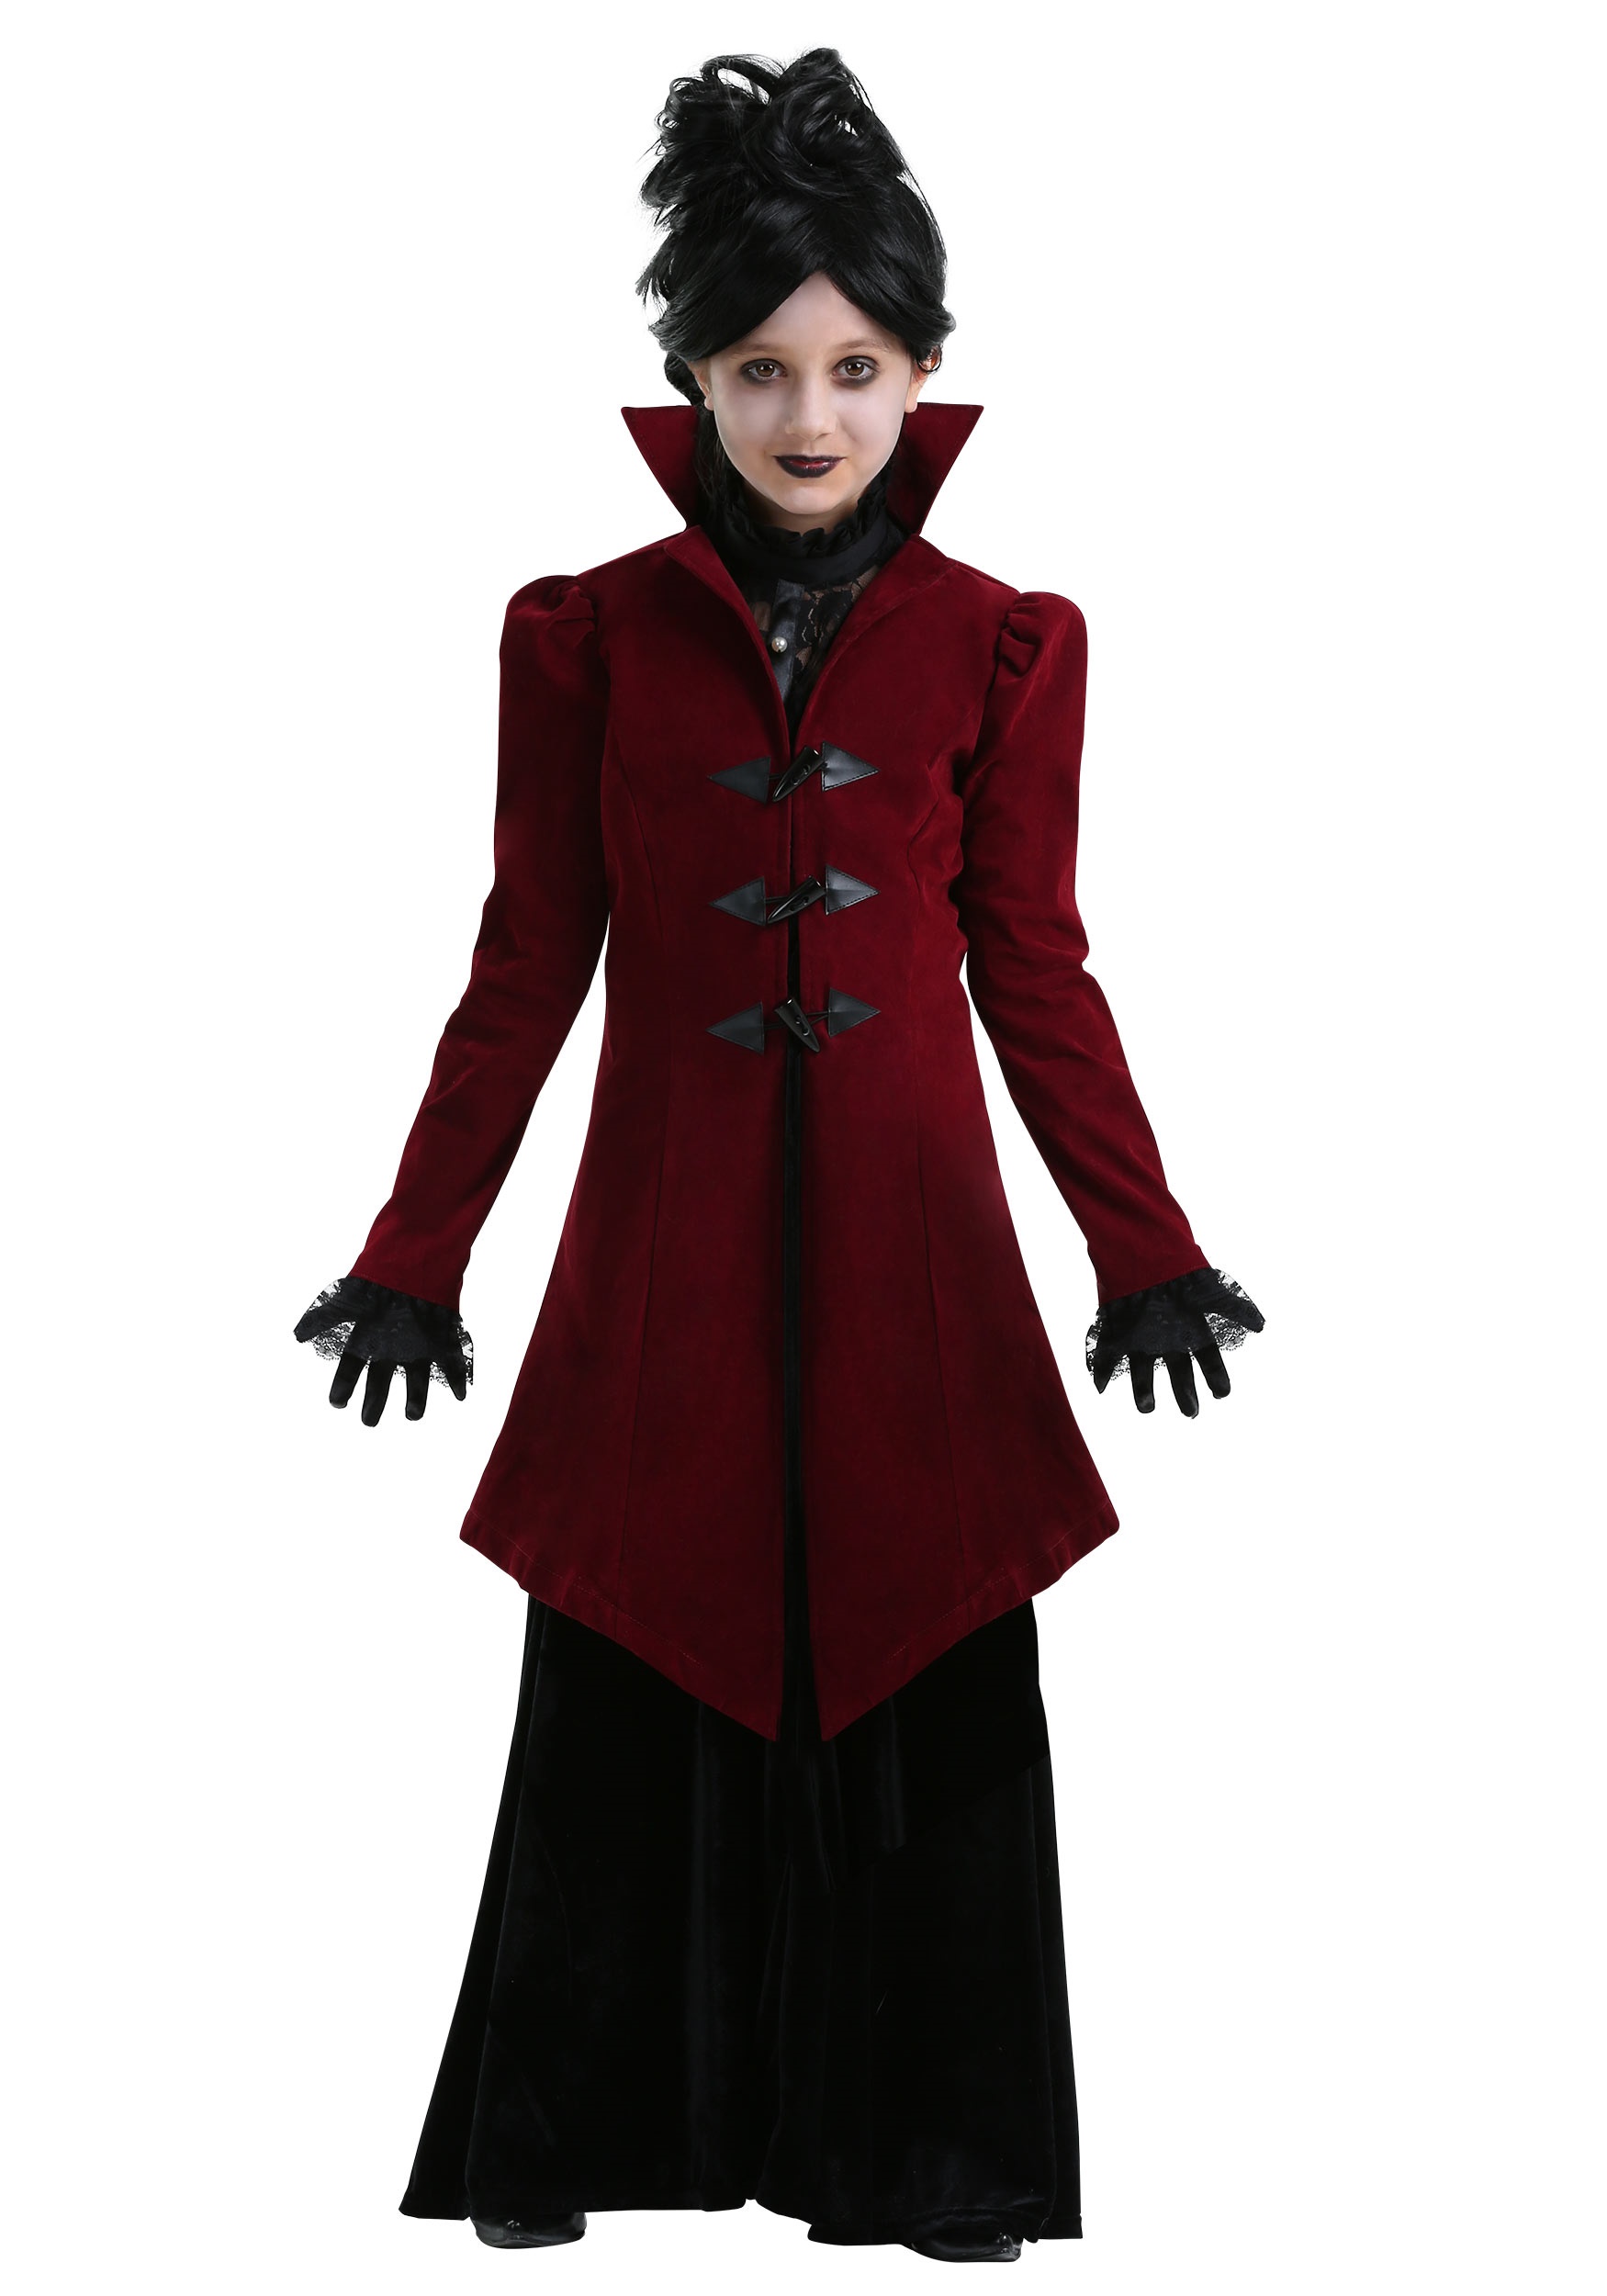 Photos - Fancy Dress FUN Costumes Delightfully Dreadful Vampiress Costume for Girls Black/R